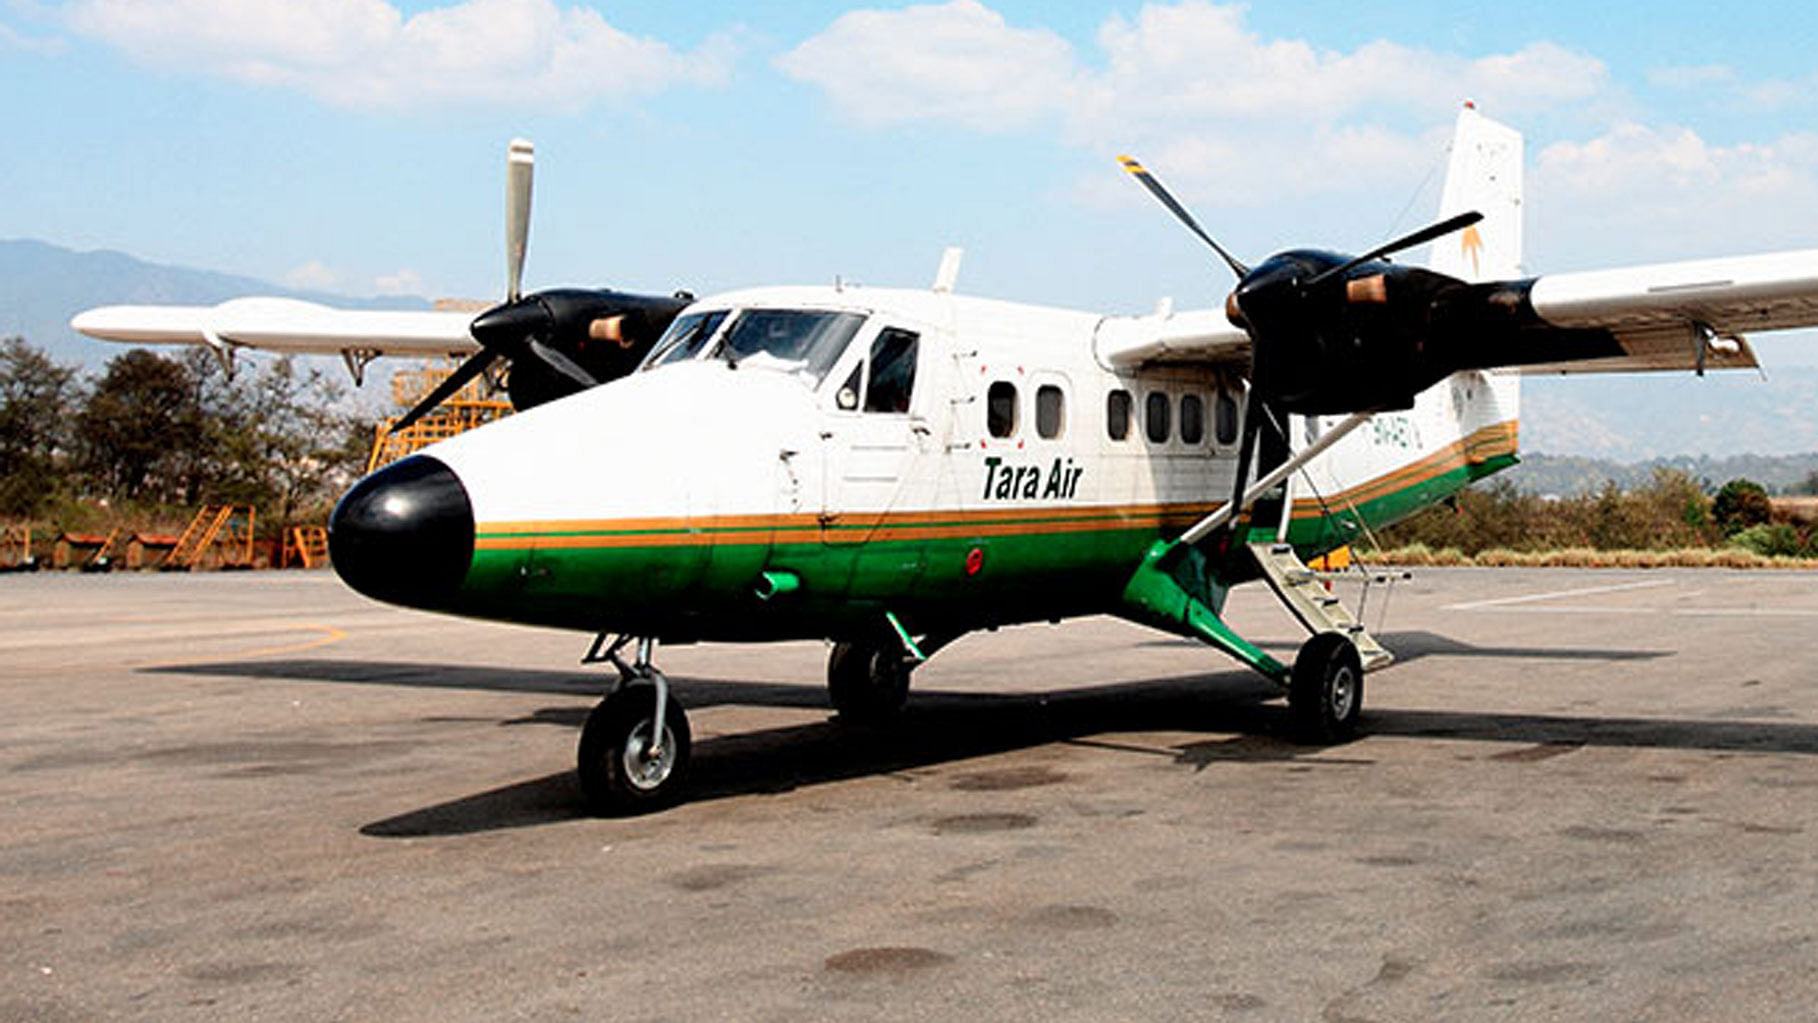 A Tara Air plane. Image used for representational purposes. (Photo Courtesy: <a href="http://www.taraair.com/">Tara Air</a>)